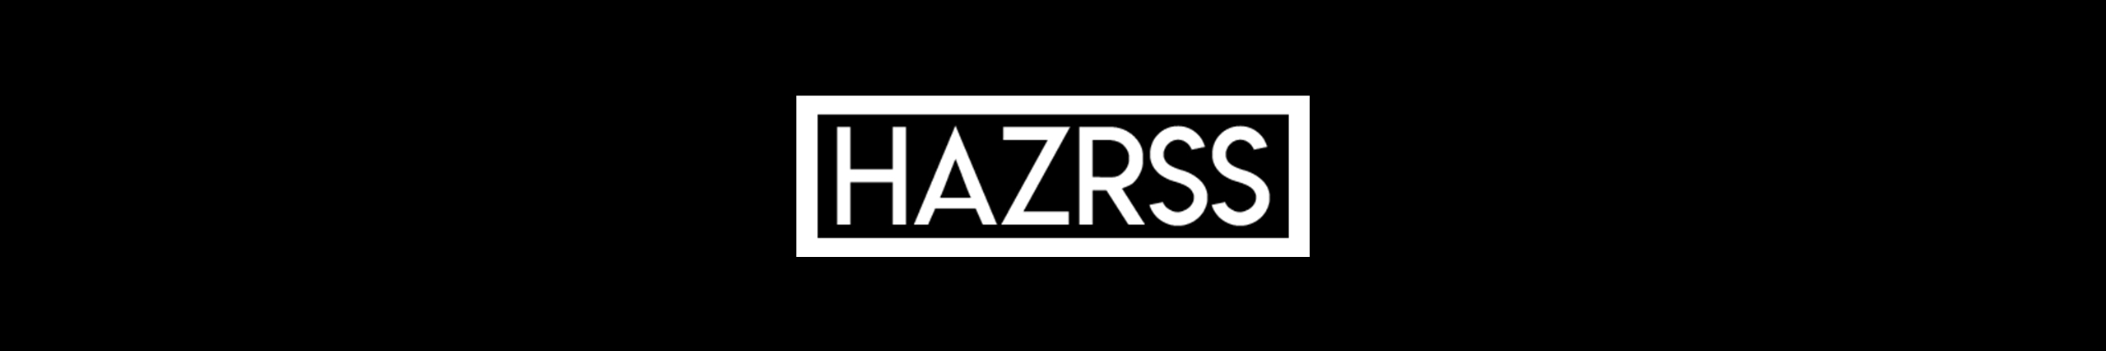 HAZRSS